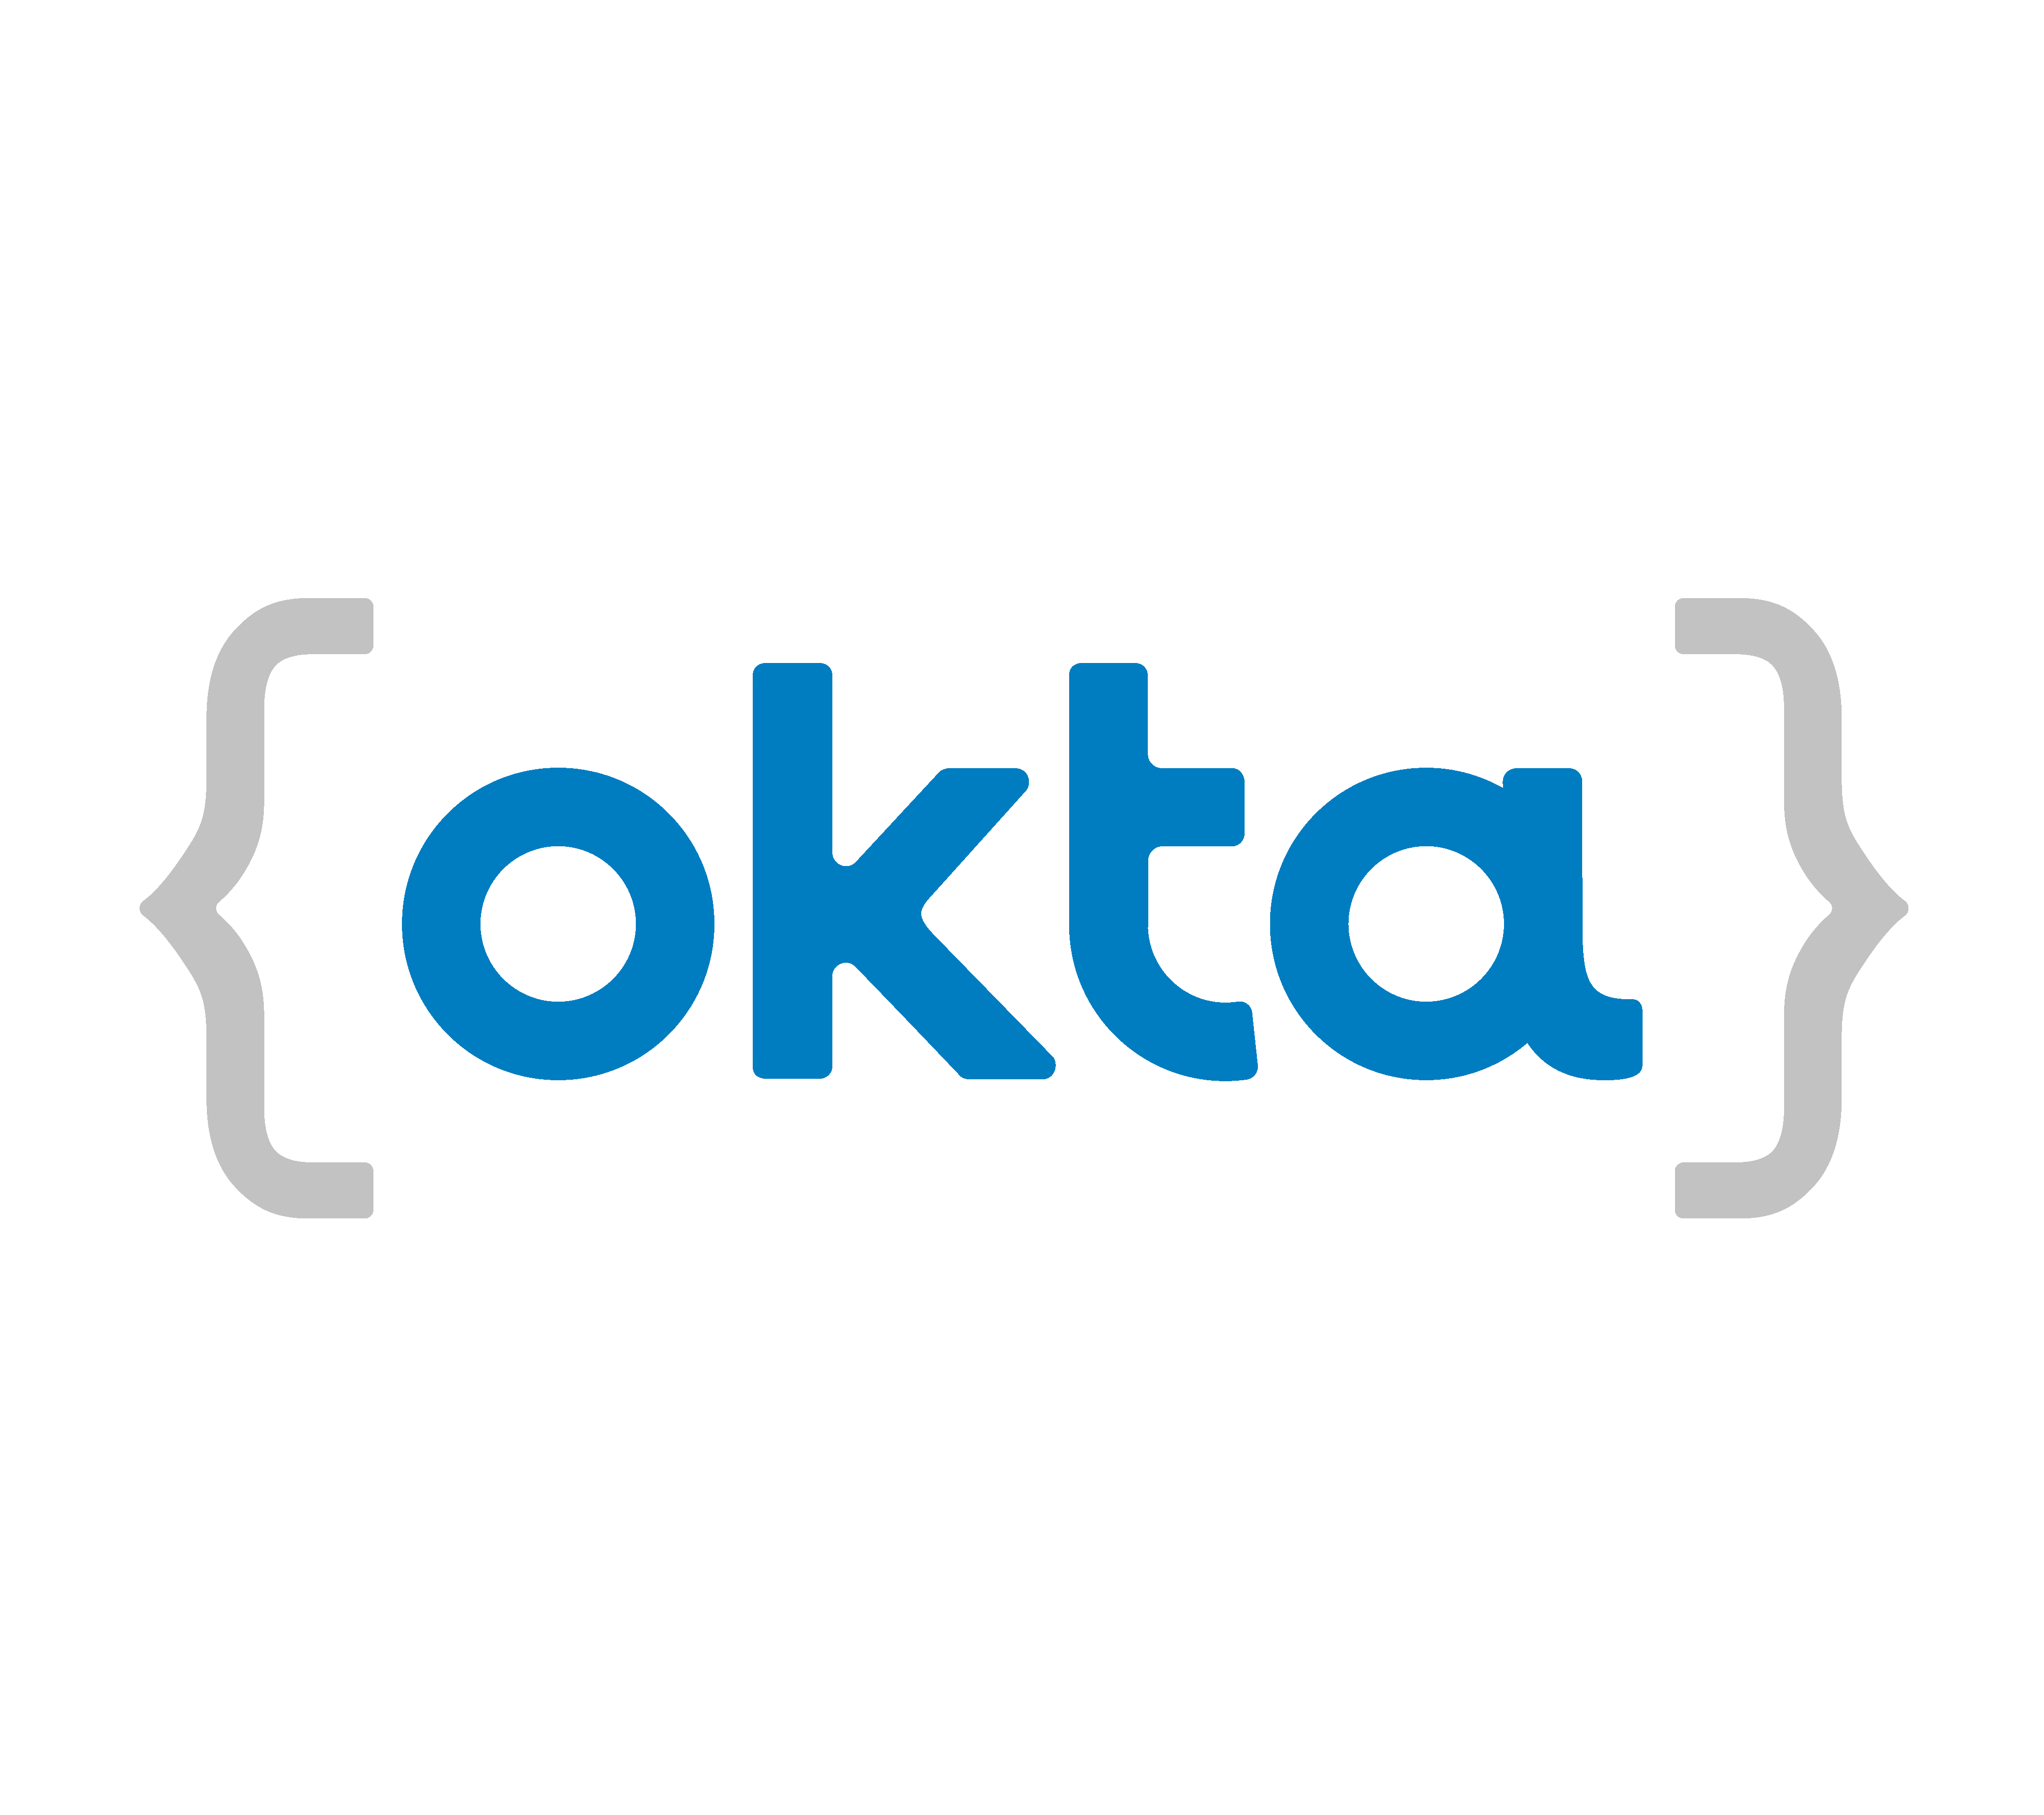 Okta